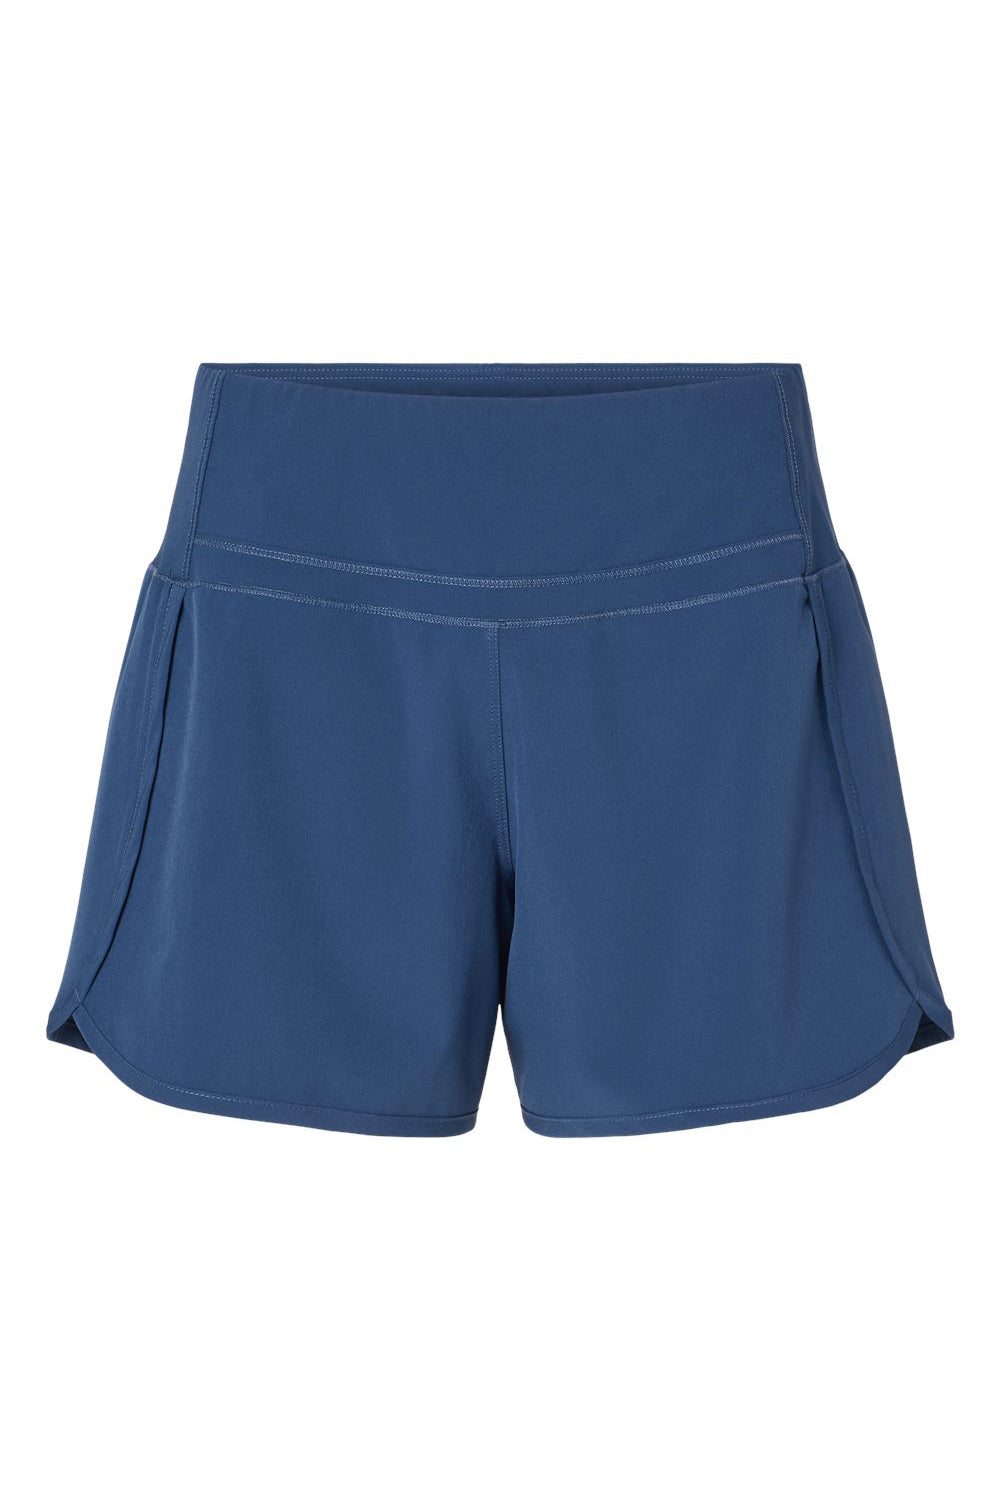 Boxercraft BW6103 Womens Stretch Woven Lined Shorts Indigo Blue Flat Front